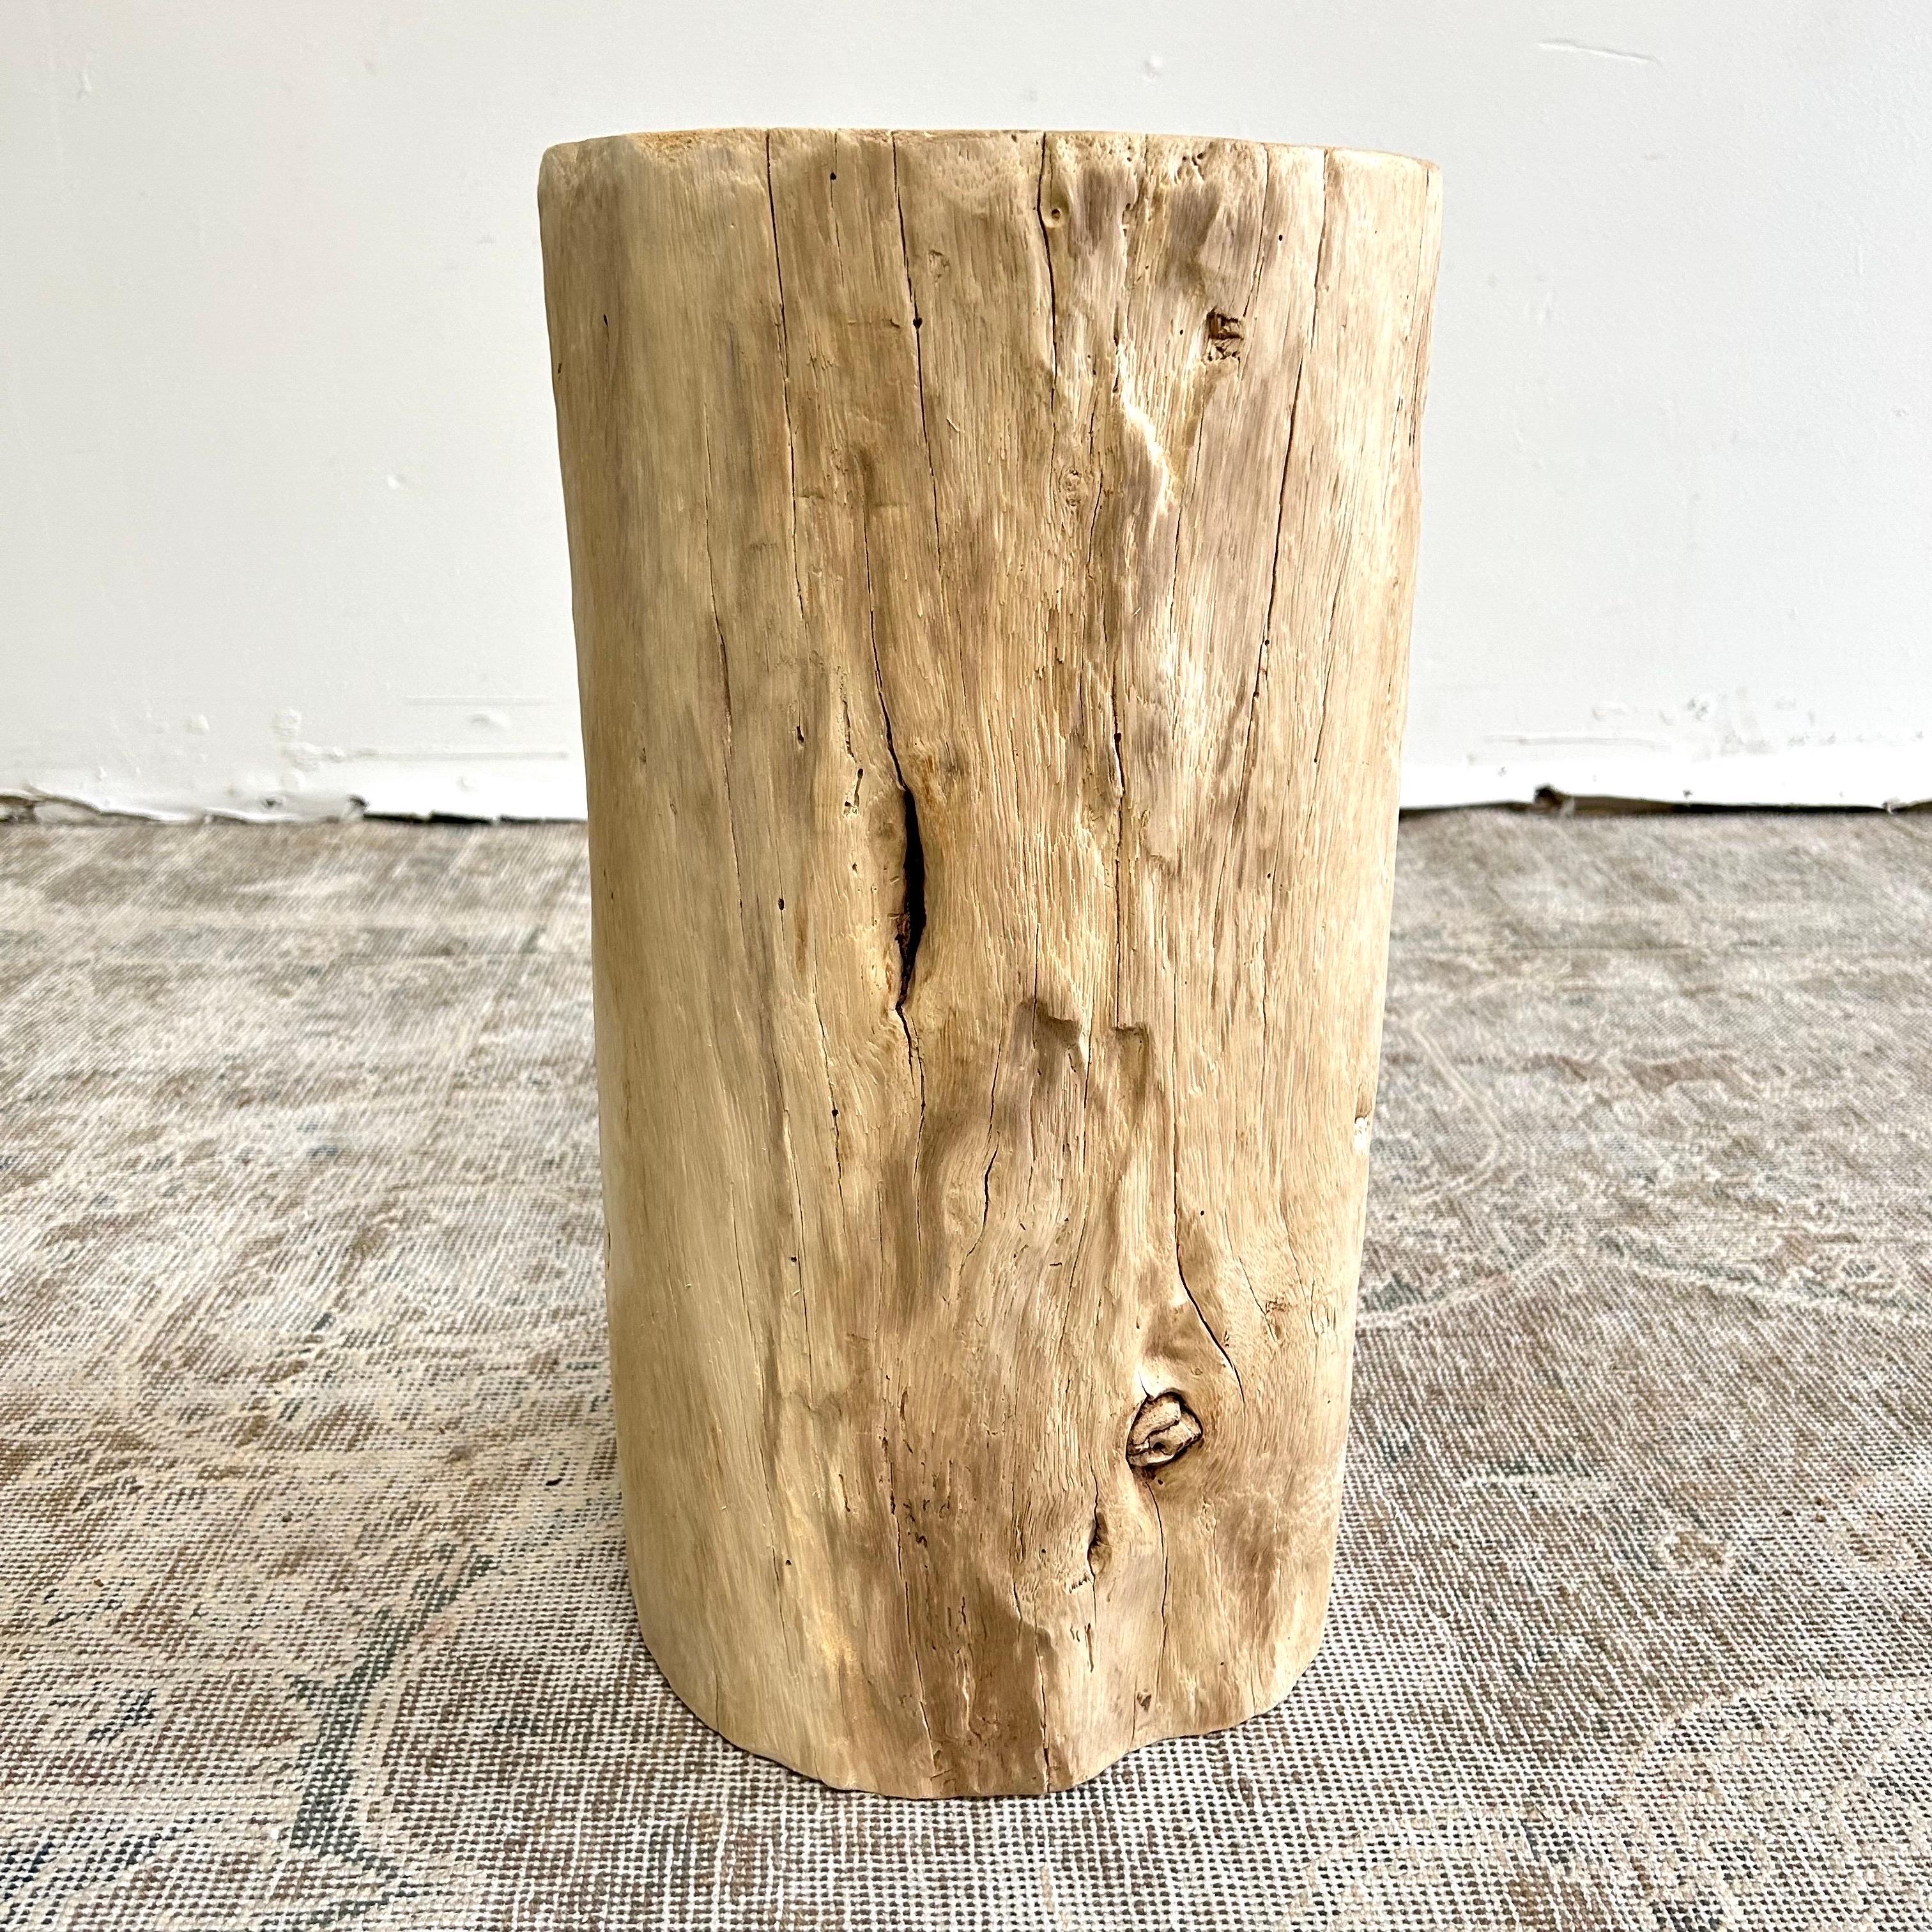 Elm Natural Wood Stump Side Table or Stool